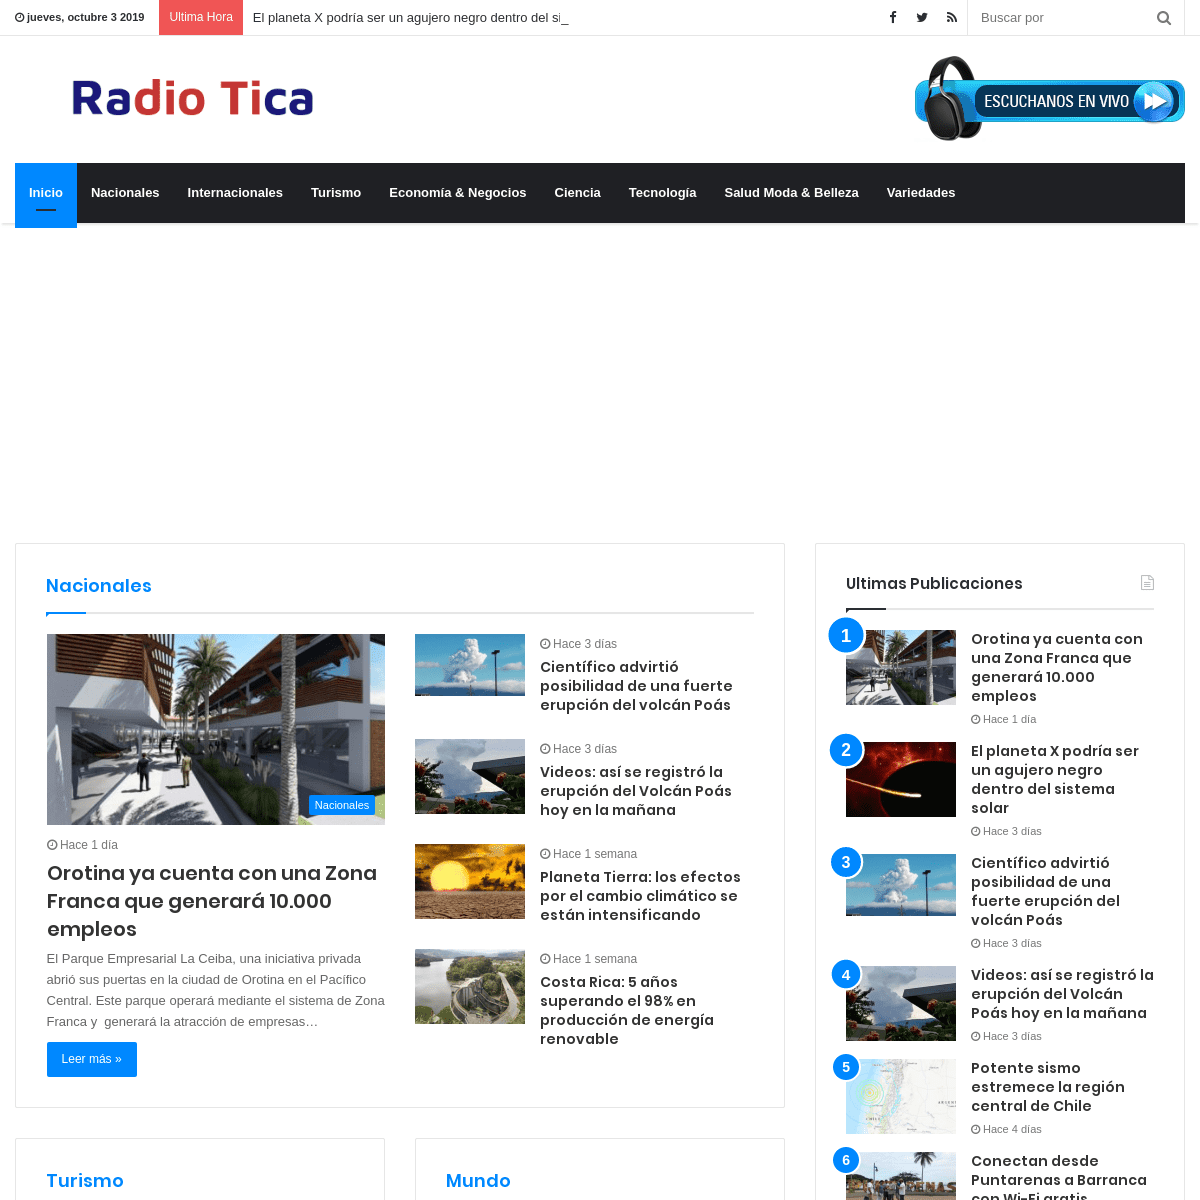 Radio Tica